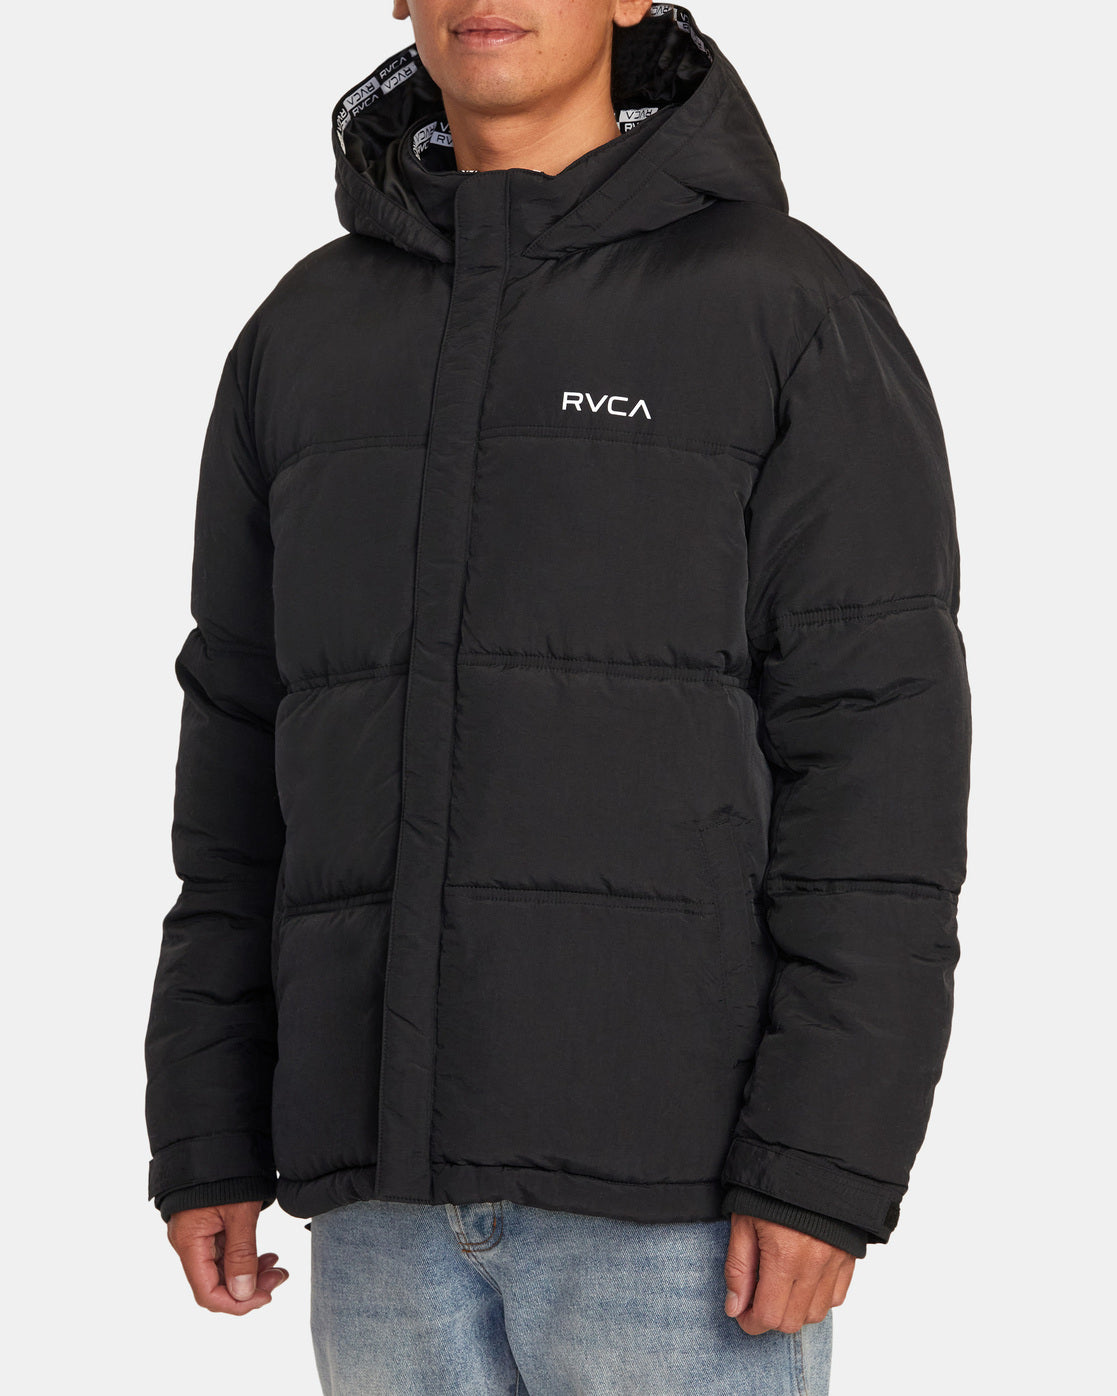 Balance Puffer Jacket - RVCA Black